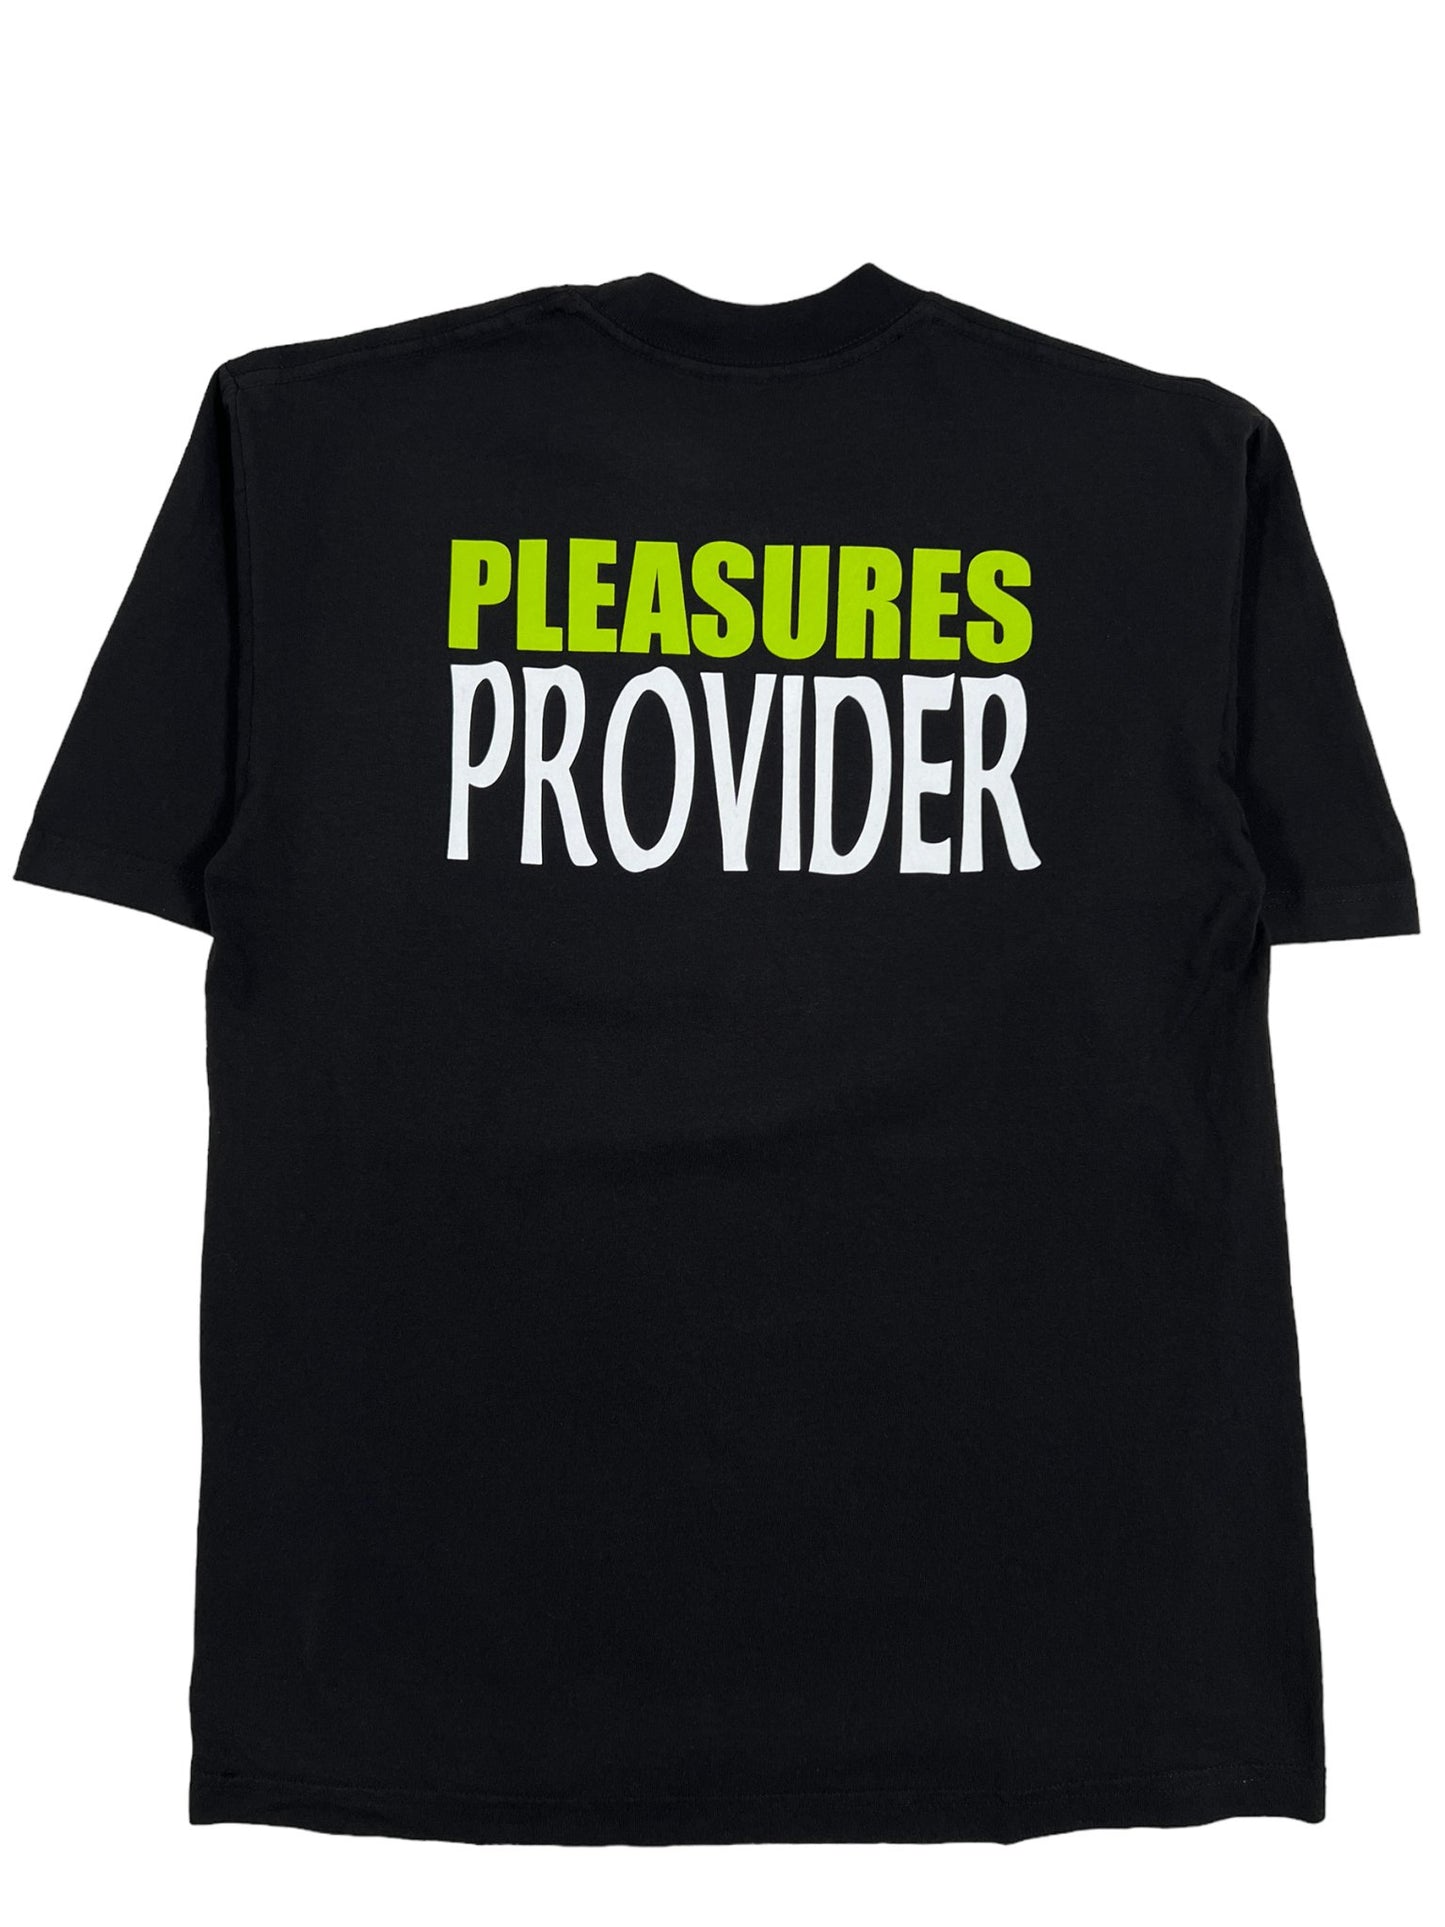 Probus PLEASURES PROVIDER T-SHIRT BLACK PLEASURES PROVIDER T-SHIRT BLACK BLACK